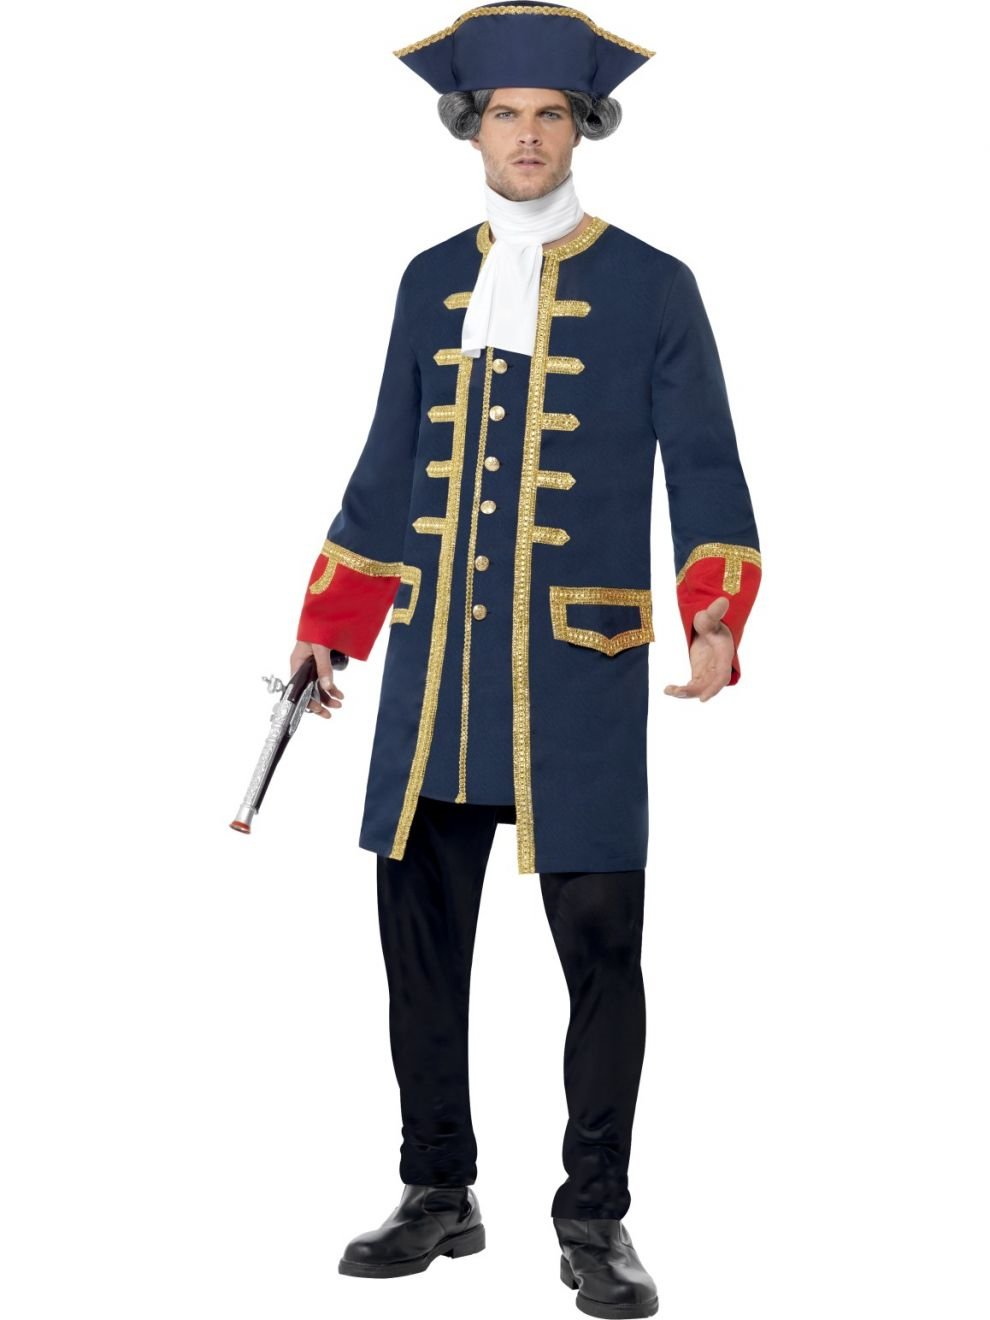 Costume Adult Pirate Commander Blue Large